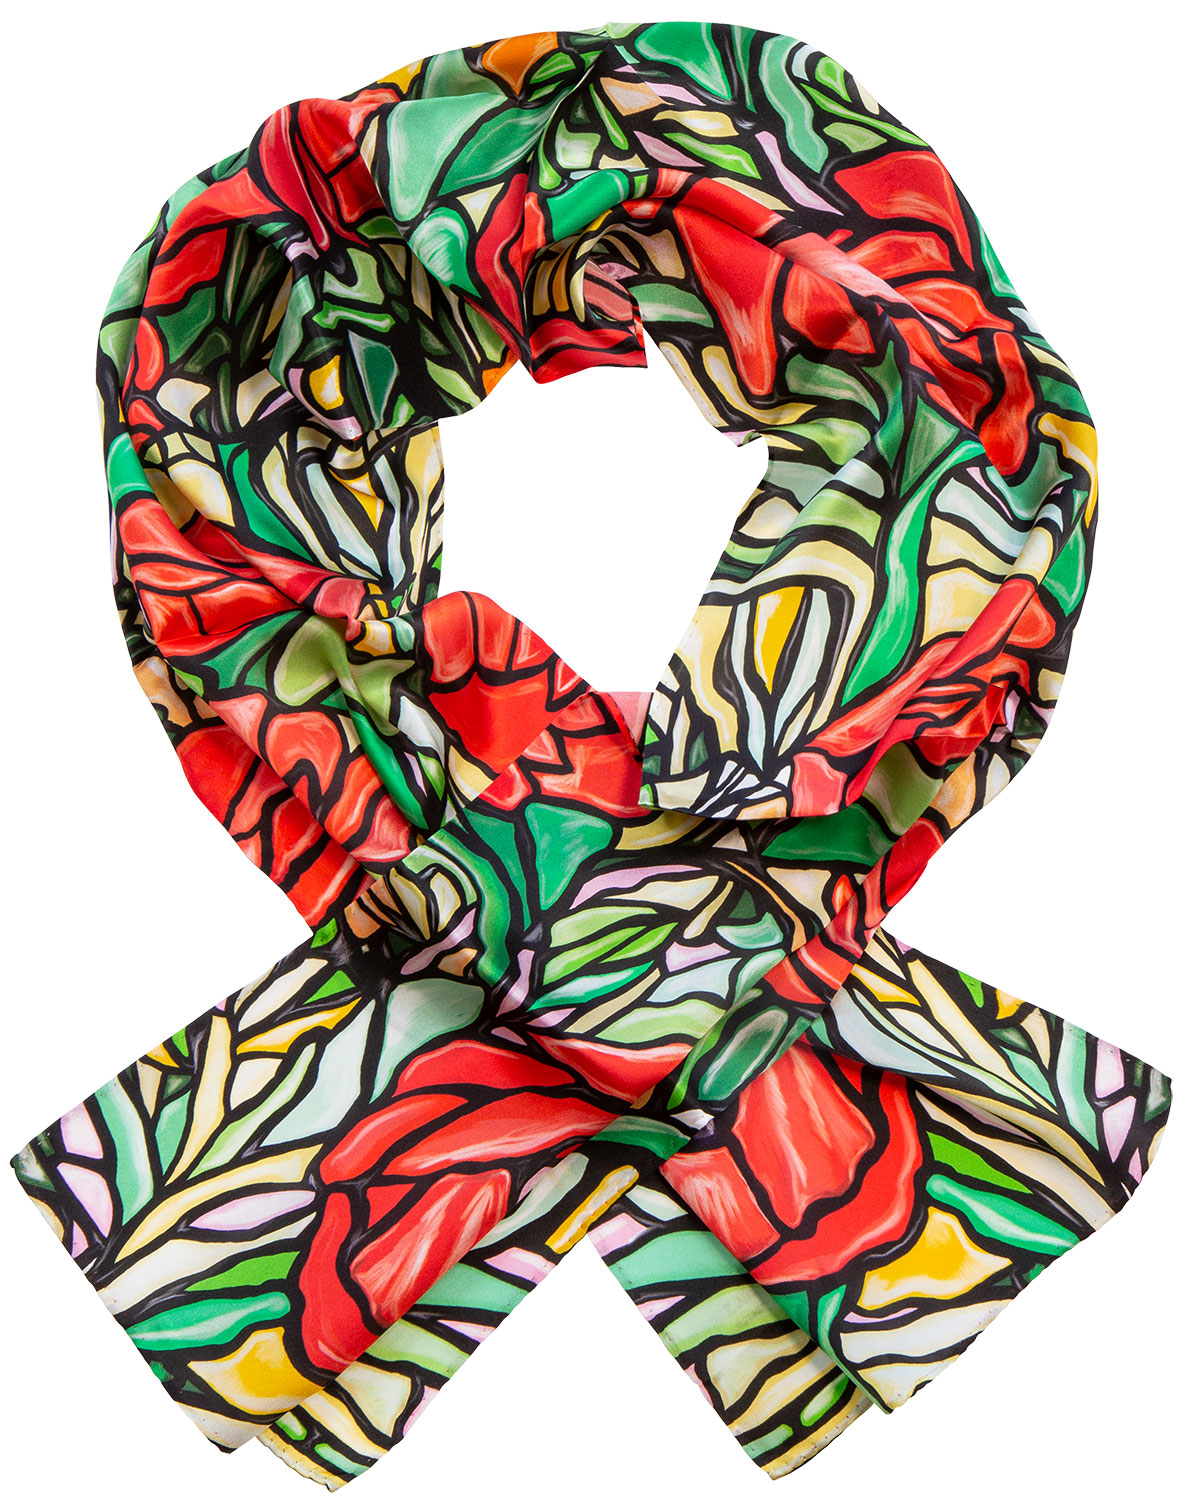 Silk scarf "Poppies" - after Louis C. Tiffany by Petra Waszak